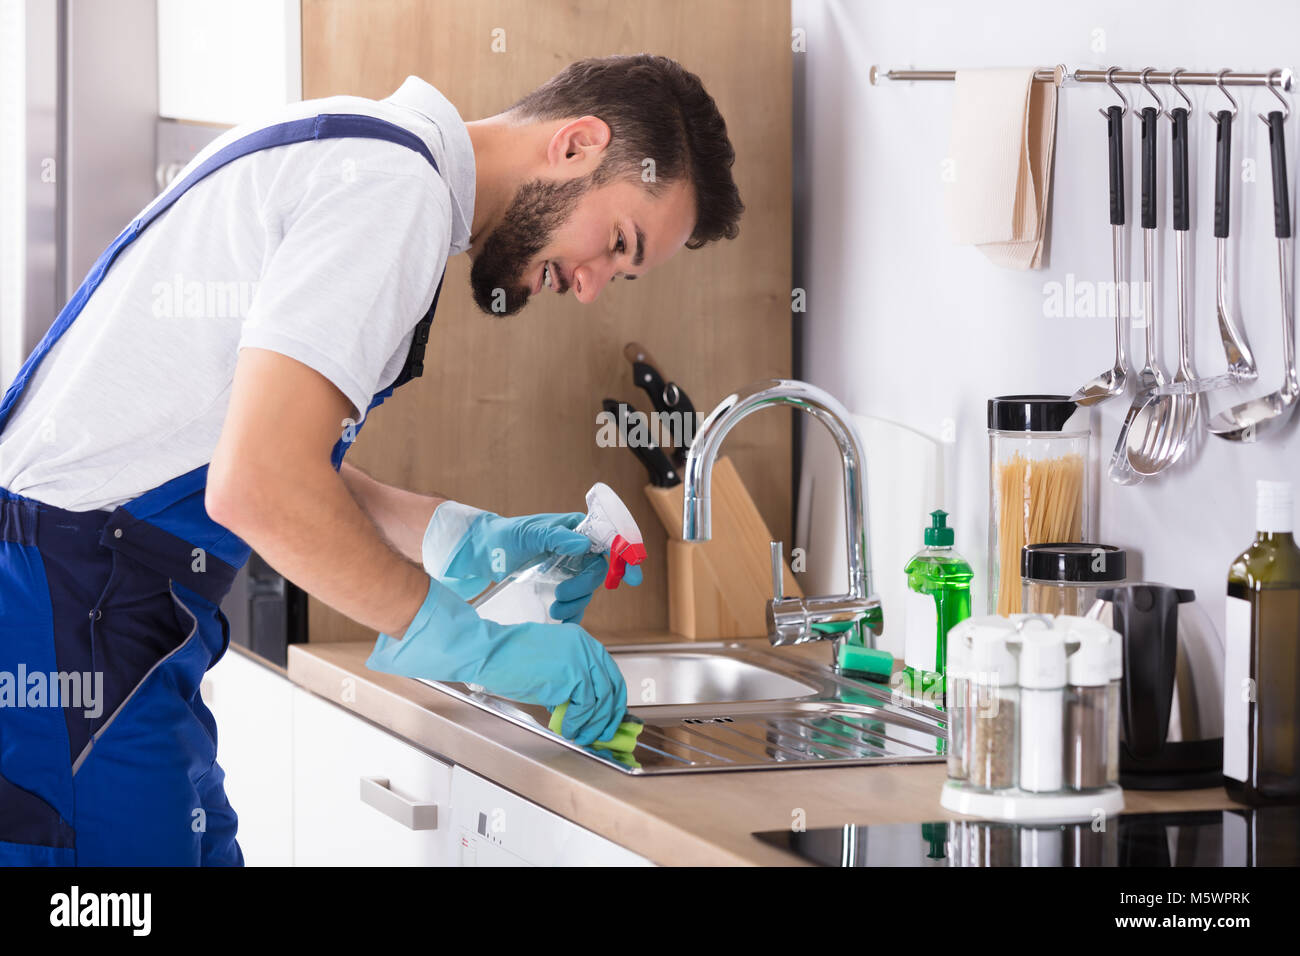 https://c8.alamy.com/comp/M5WPRK/portrait-of-a-happy-young-man-cleaning-kitchen-worktop-M5WPRK.jpg